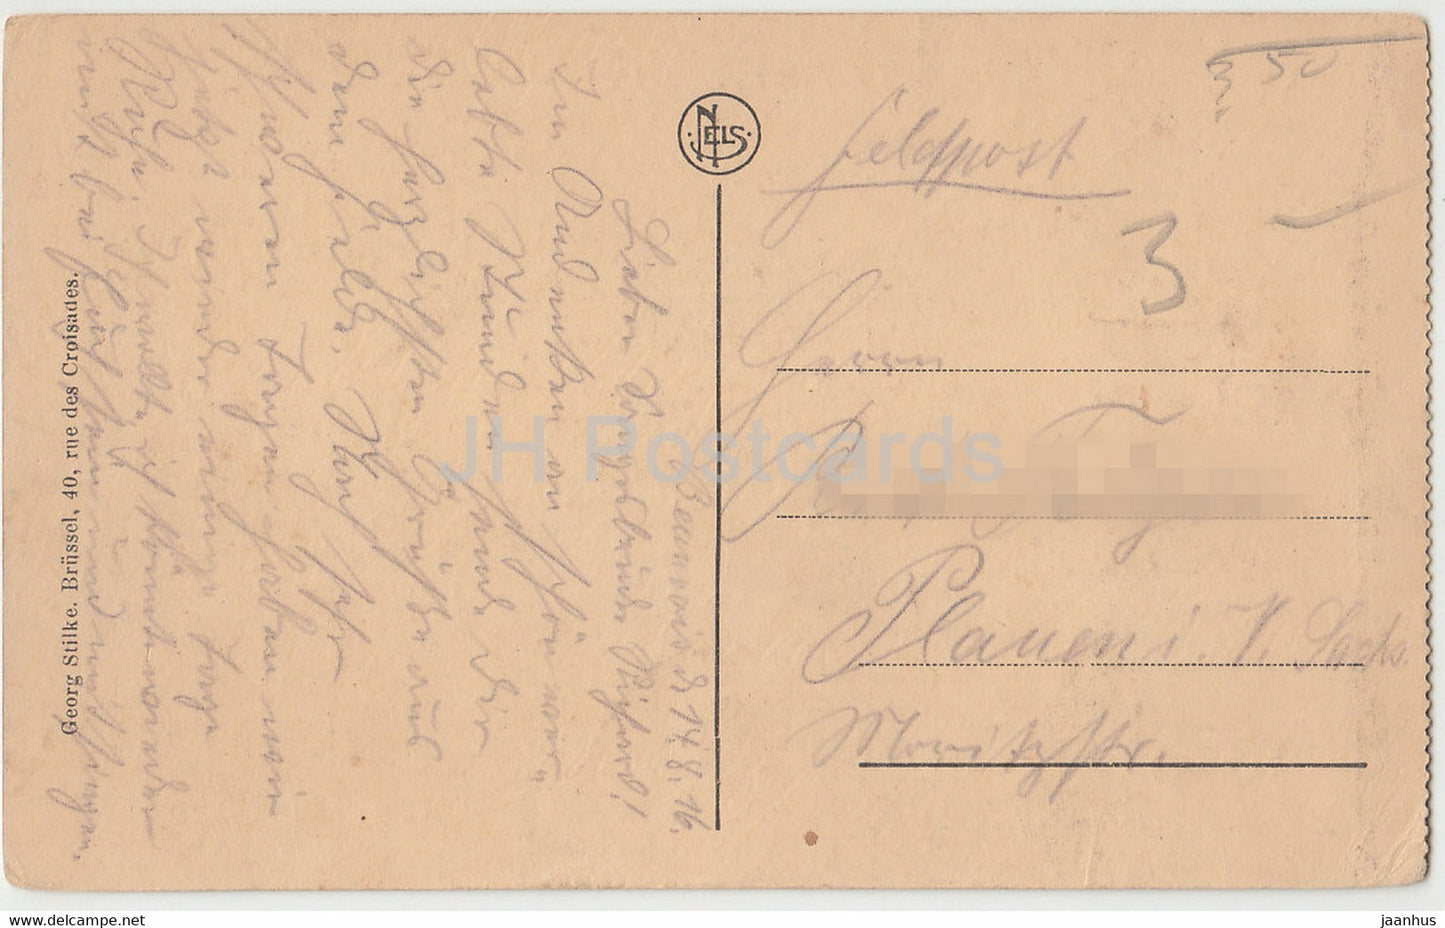 Saint Quentin - Justizpalast - Feldpost - old postcard - 1916 - France - used